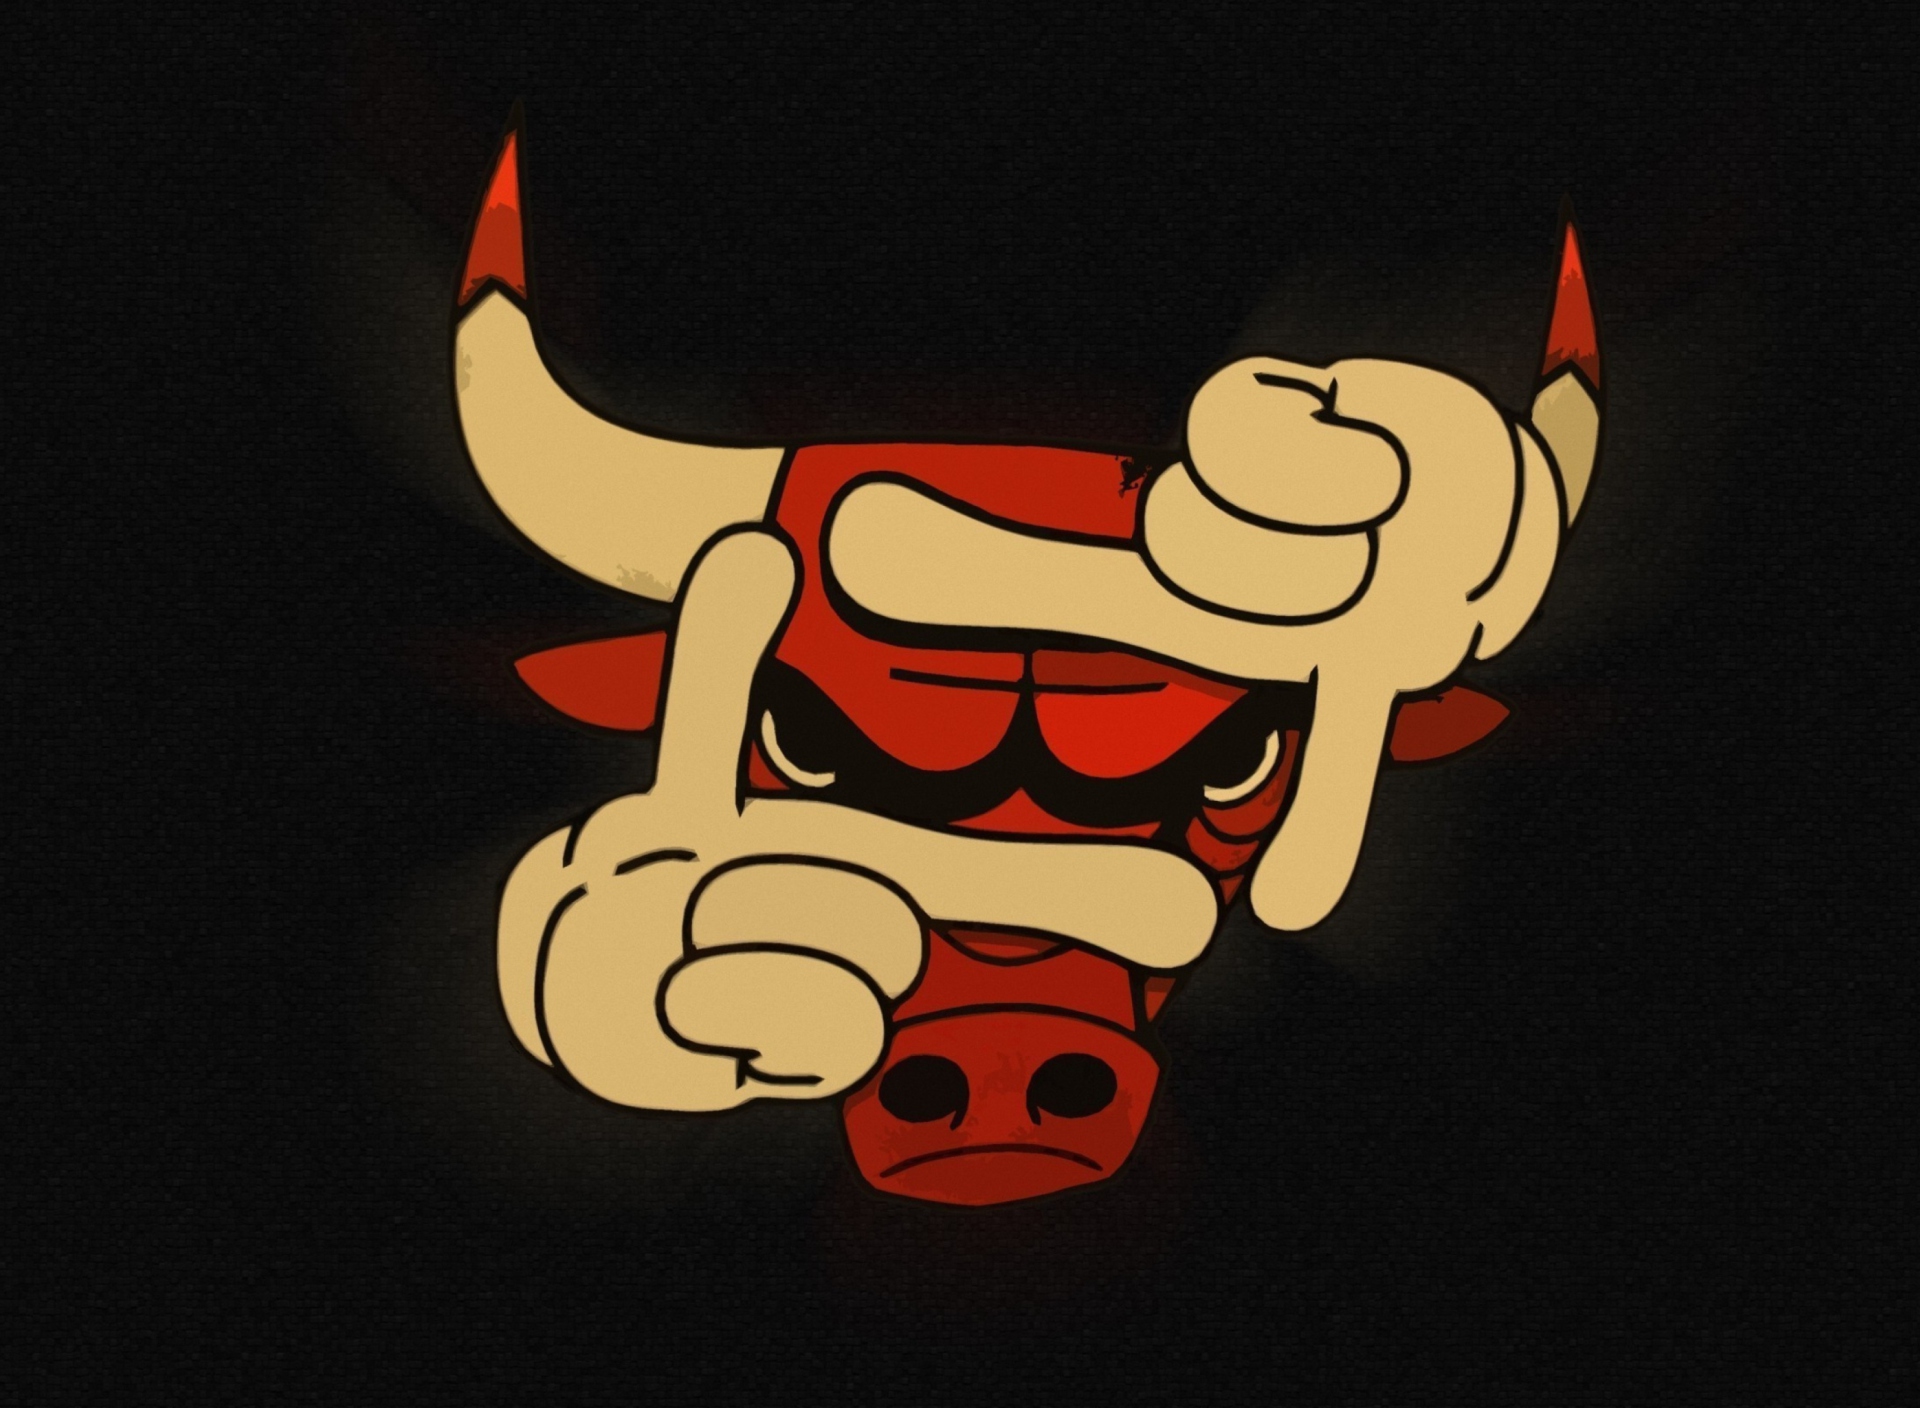 Fondo de pantalla Chicago Bulls 1920x1408